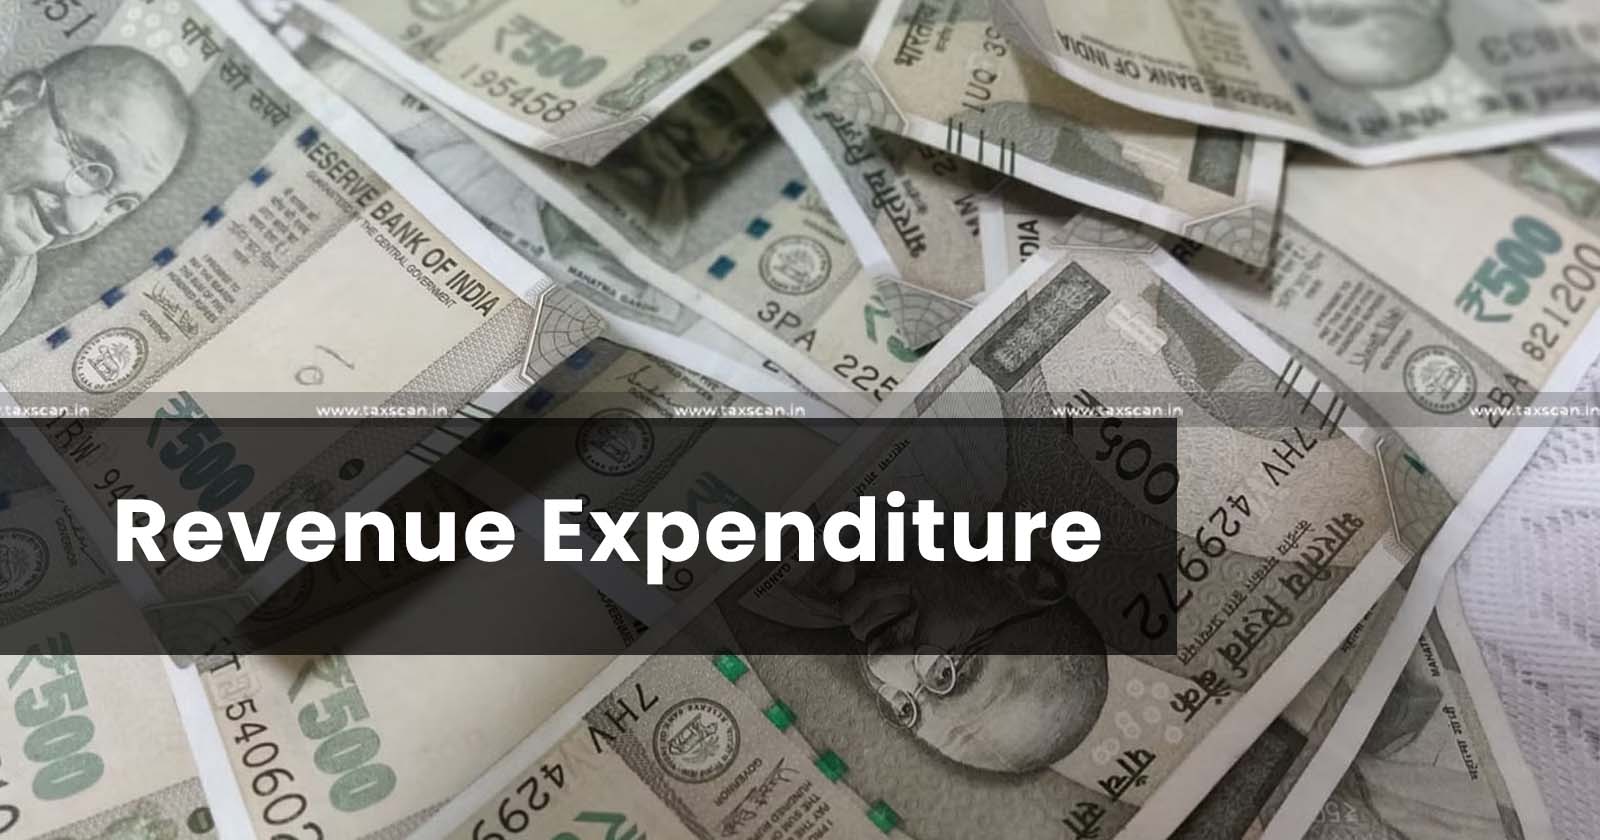 Expense - Expense on Technology - Technology - business - Revenue - Expenditure - Revenue Expenditure - Delhi HC - taxscan